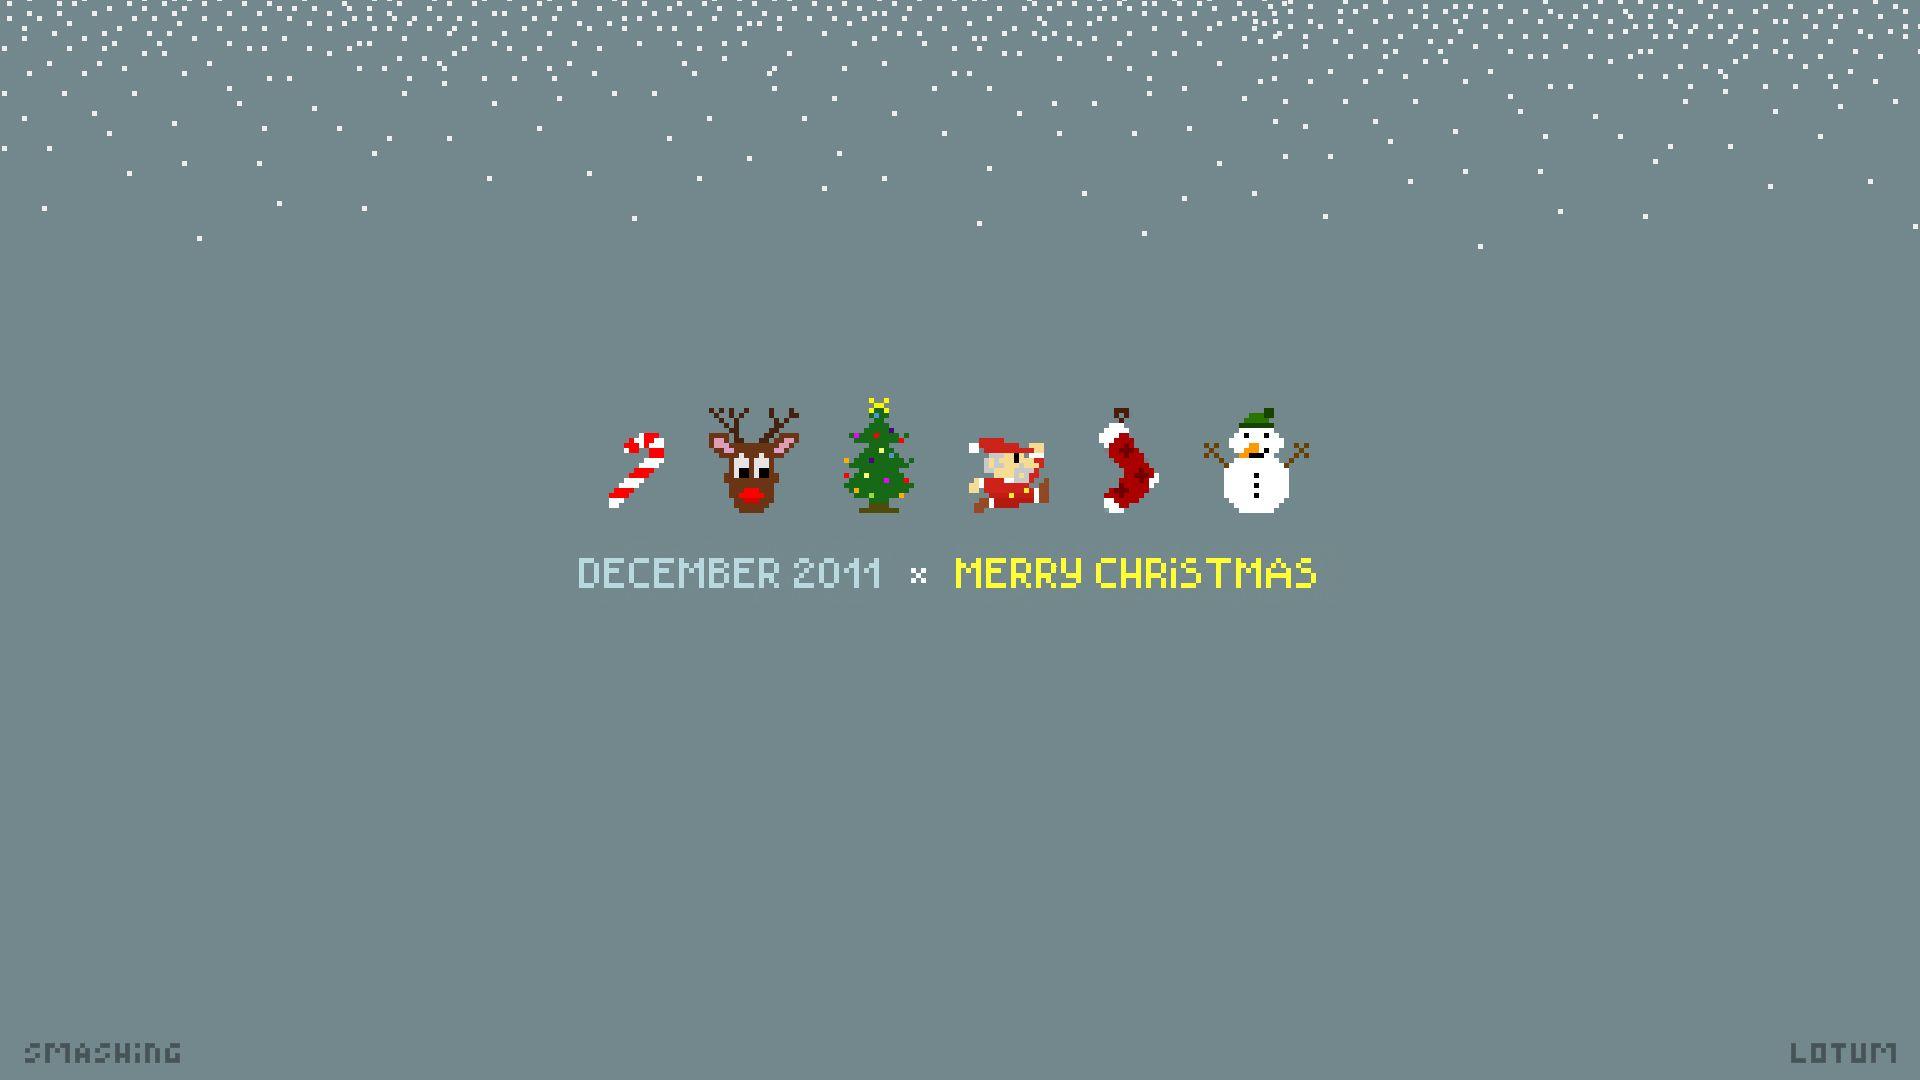 December 2011 - Merry Christmas wallpaper by ~L0tum on deviantART. - Christmas, cute Christmas